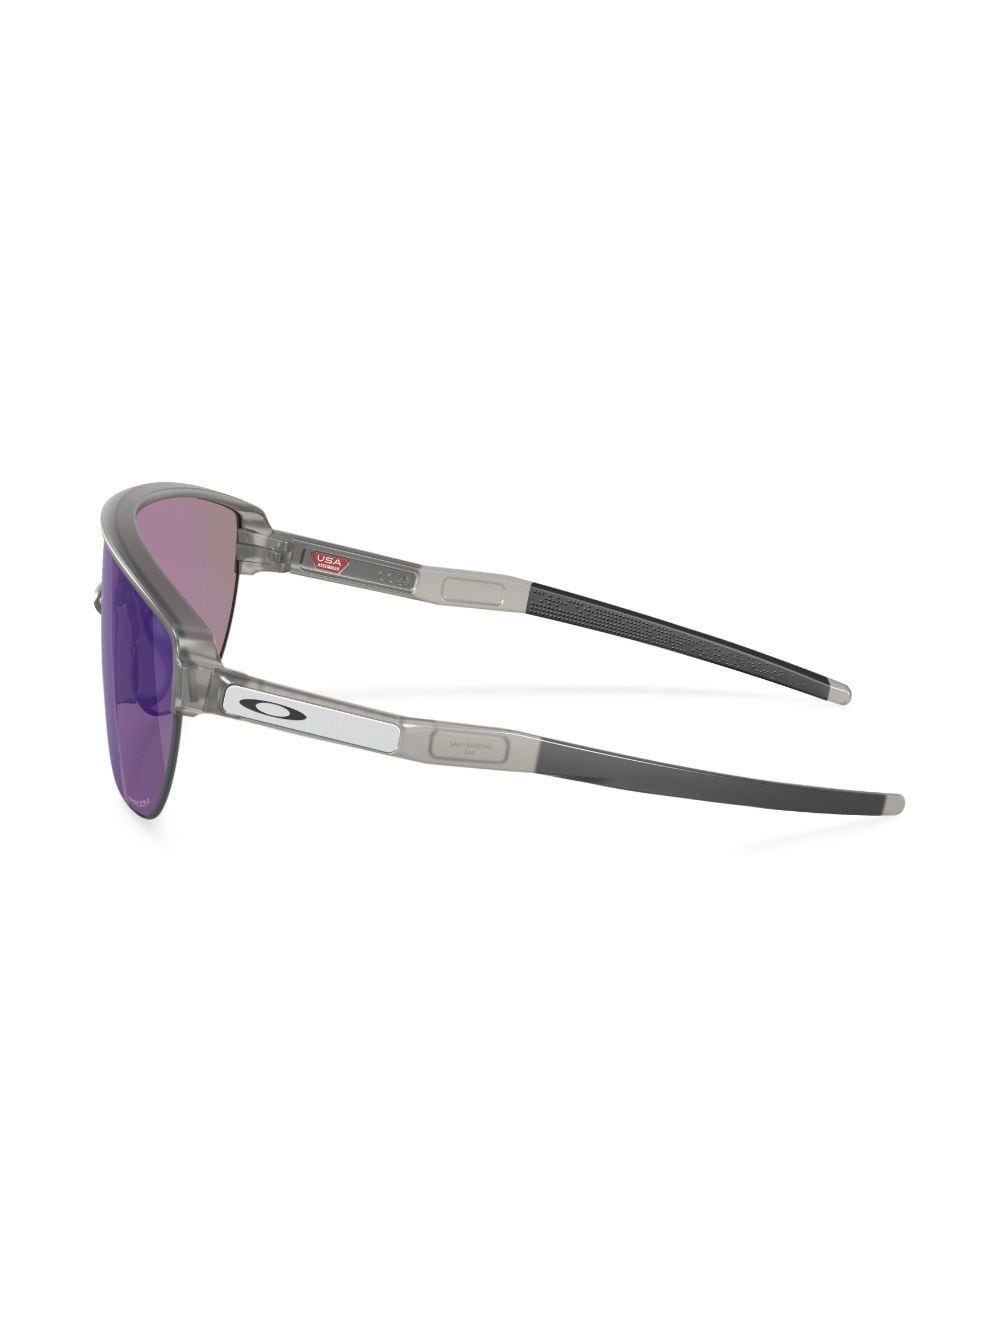 Corridor pilot-frame sunglasses<BR/>